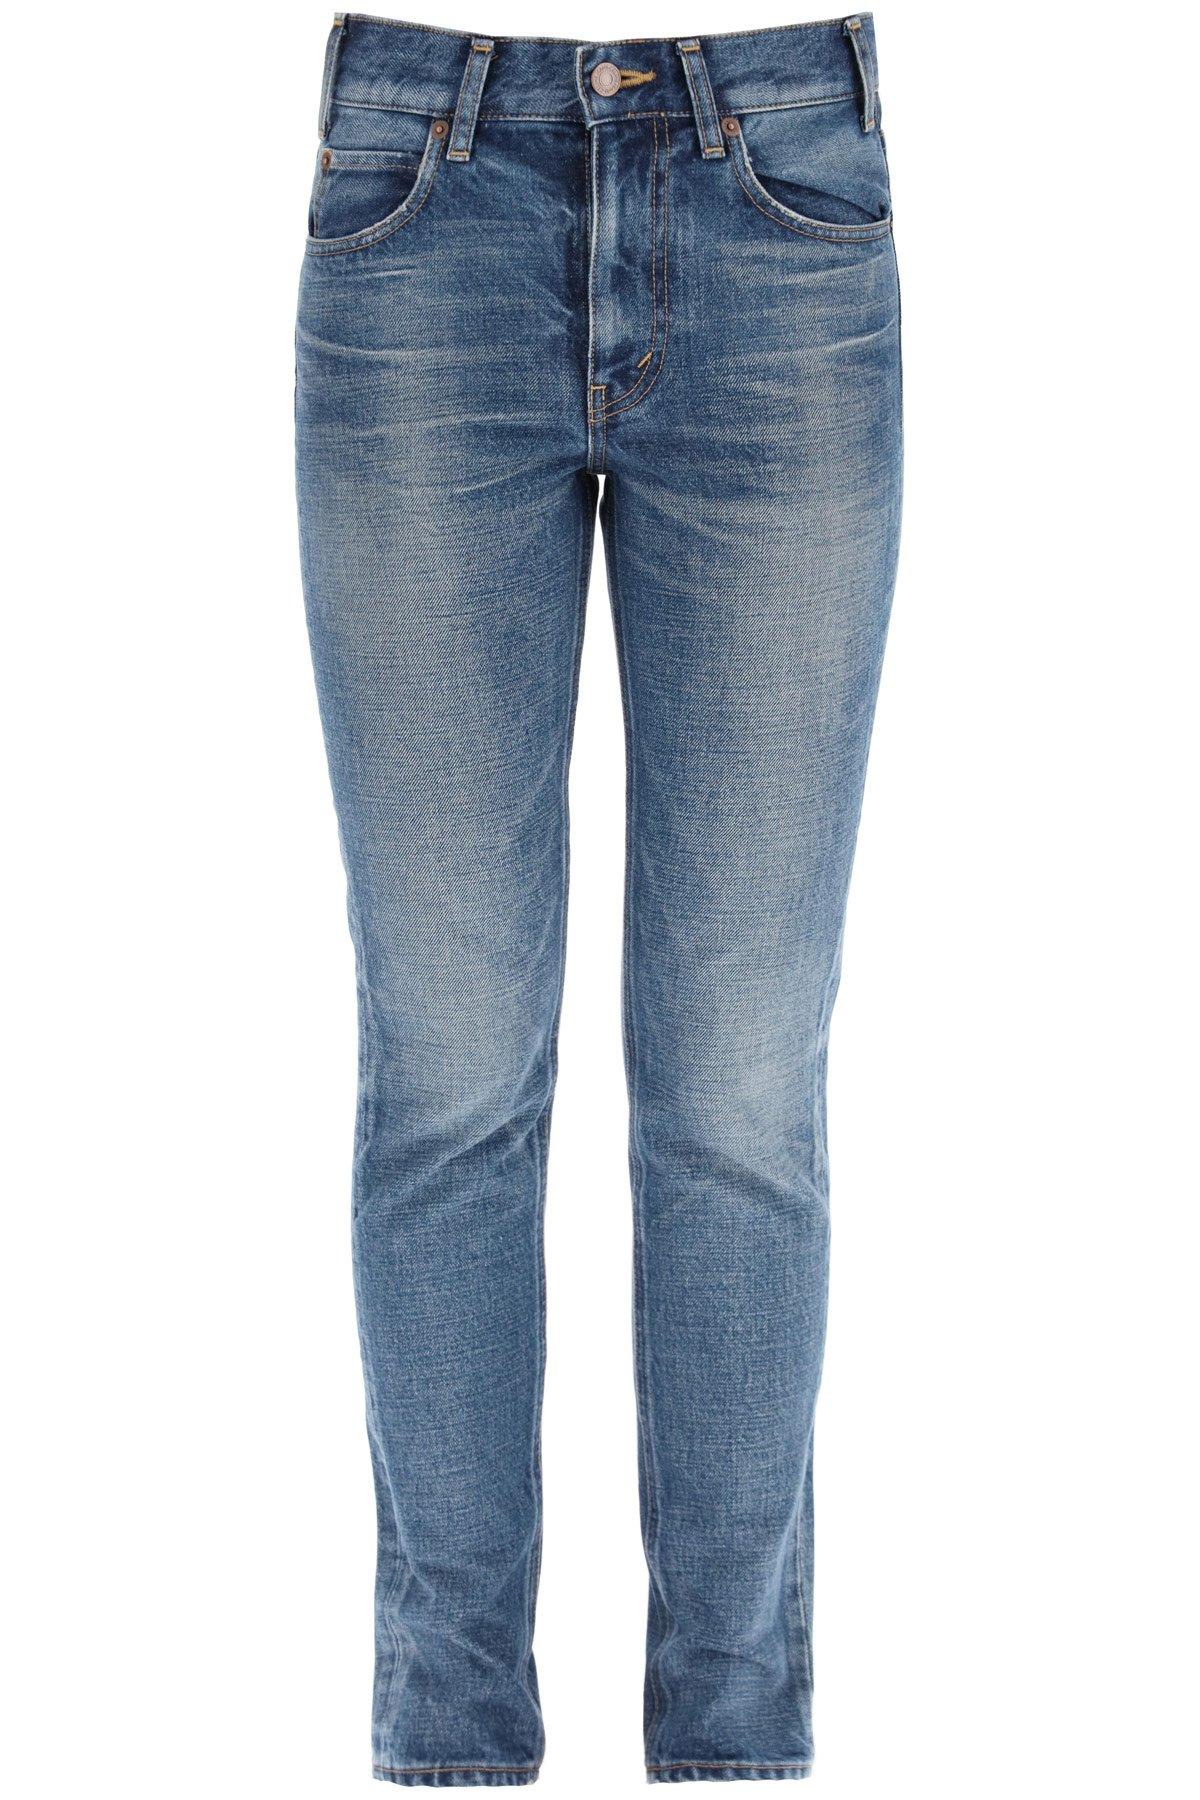 Celine Denim Union Wash Slim Jeans in Blue | Lyst